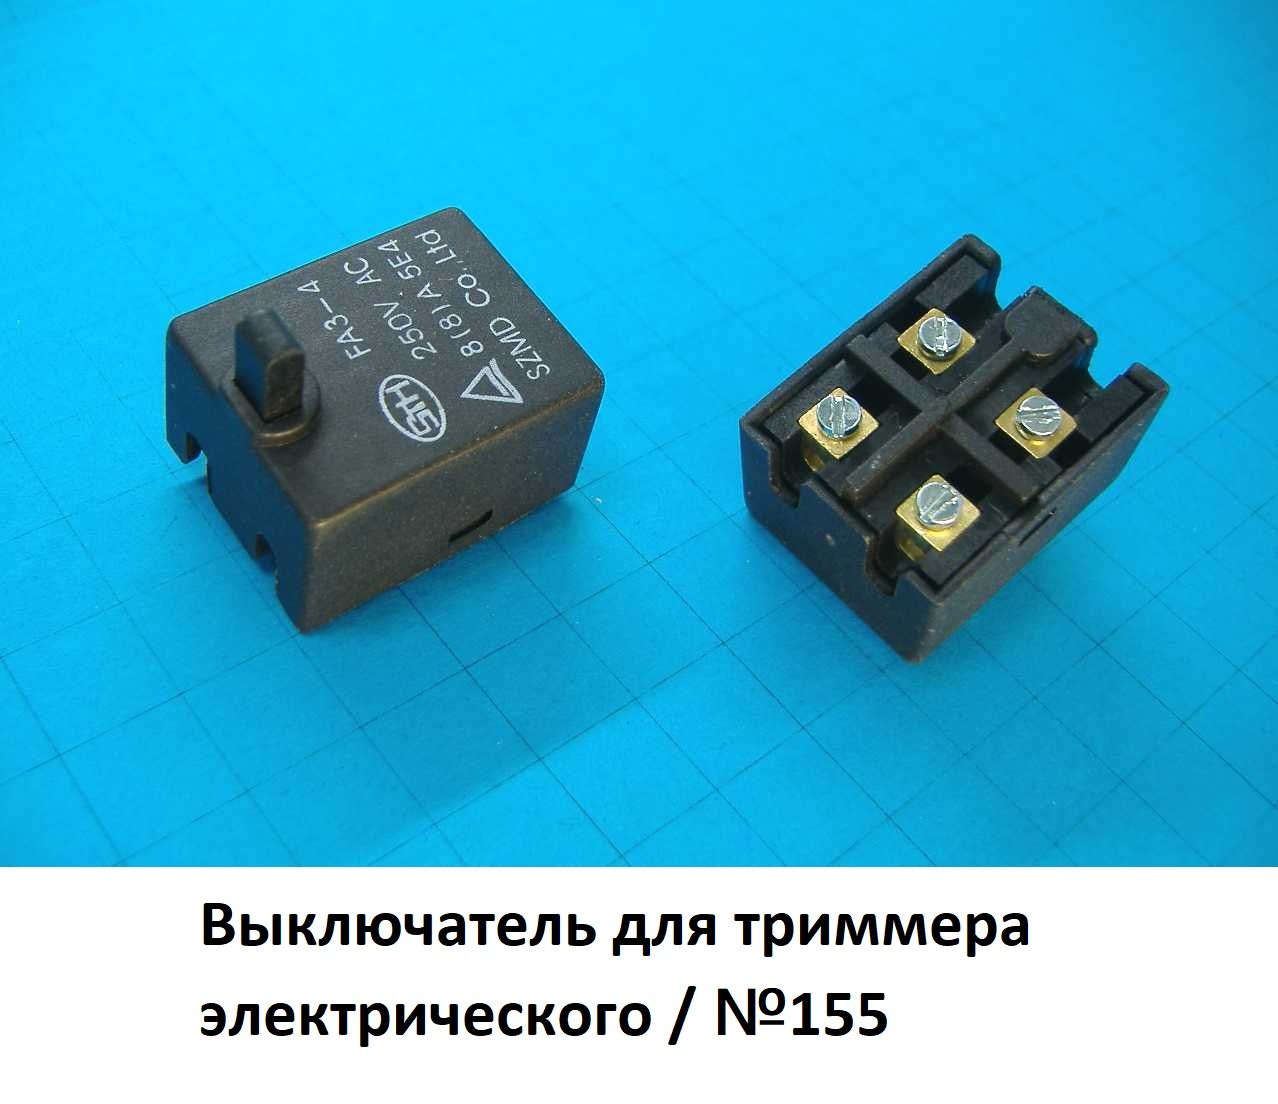 Ad50s2sm3fa. Выключатель для триммера электрического МТД SZMD fa3-4. Выключатель для Эл триммера OMAX fa3-4. Fa3-4 кнопка 8а 250в. Переключатель fa3-4, для триммера.